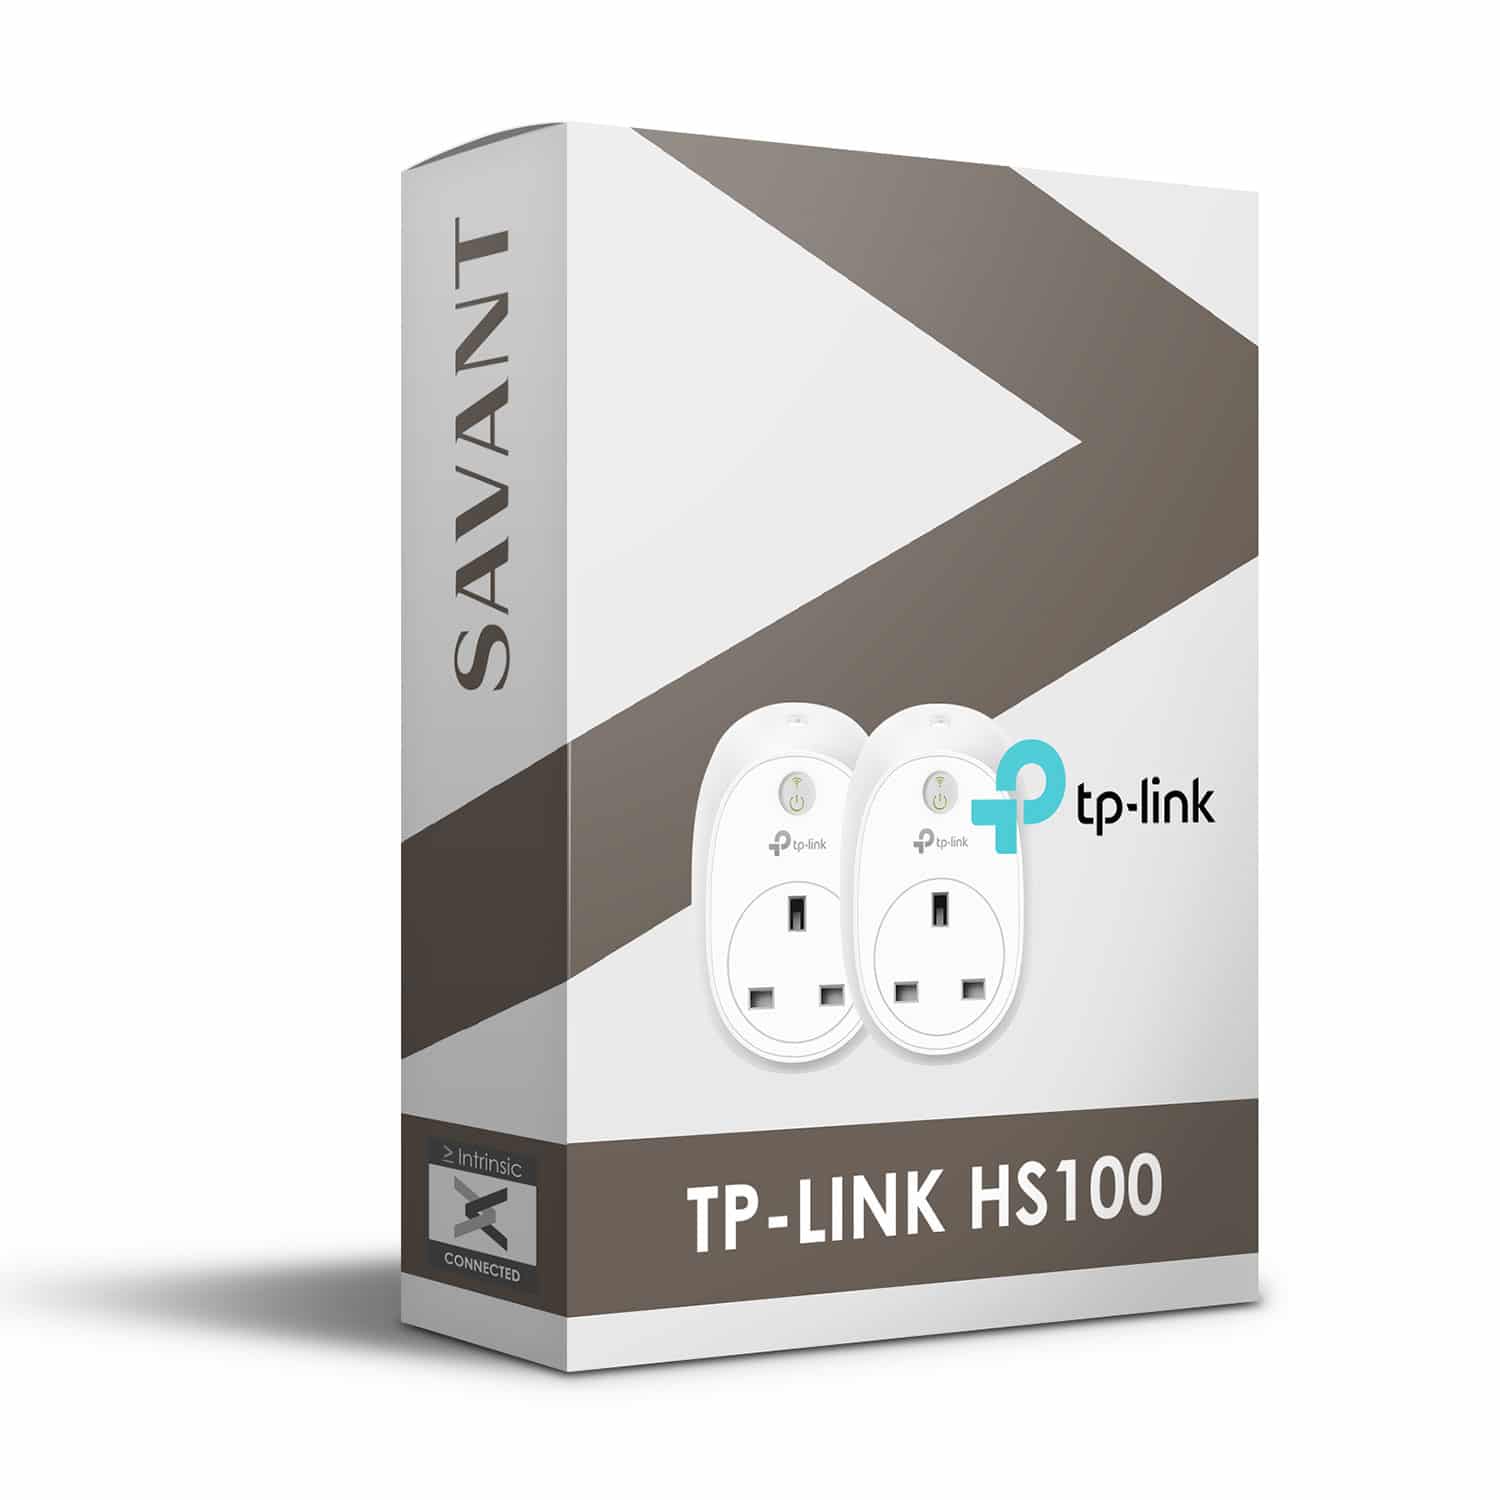 TP Link Smart Plug Profile for Savant